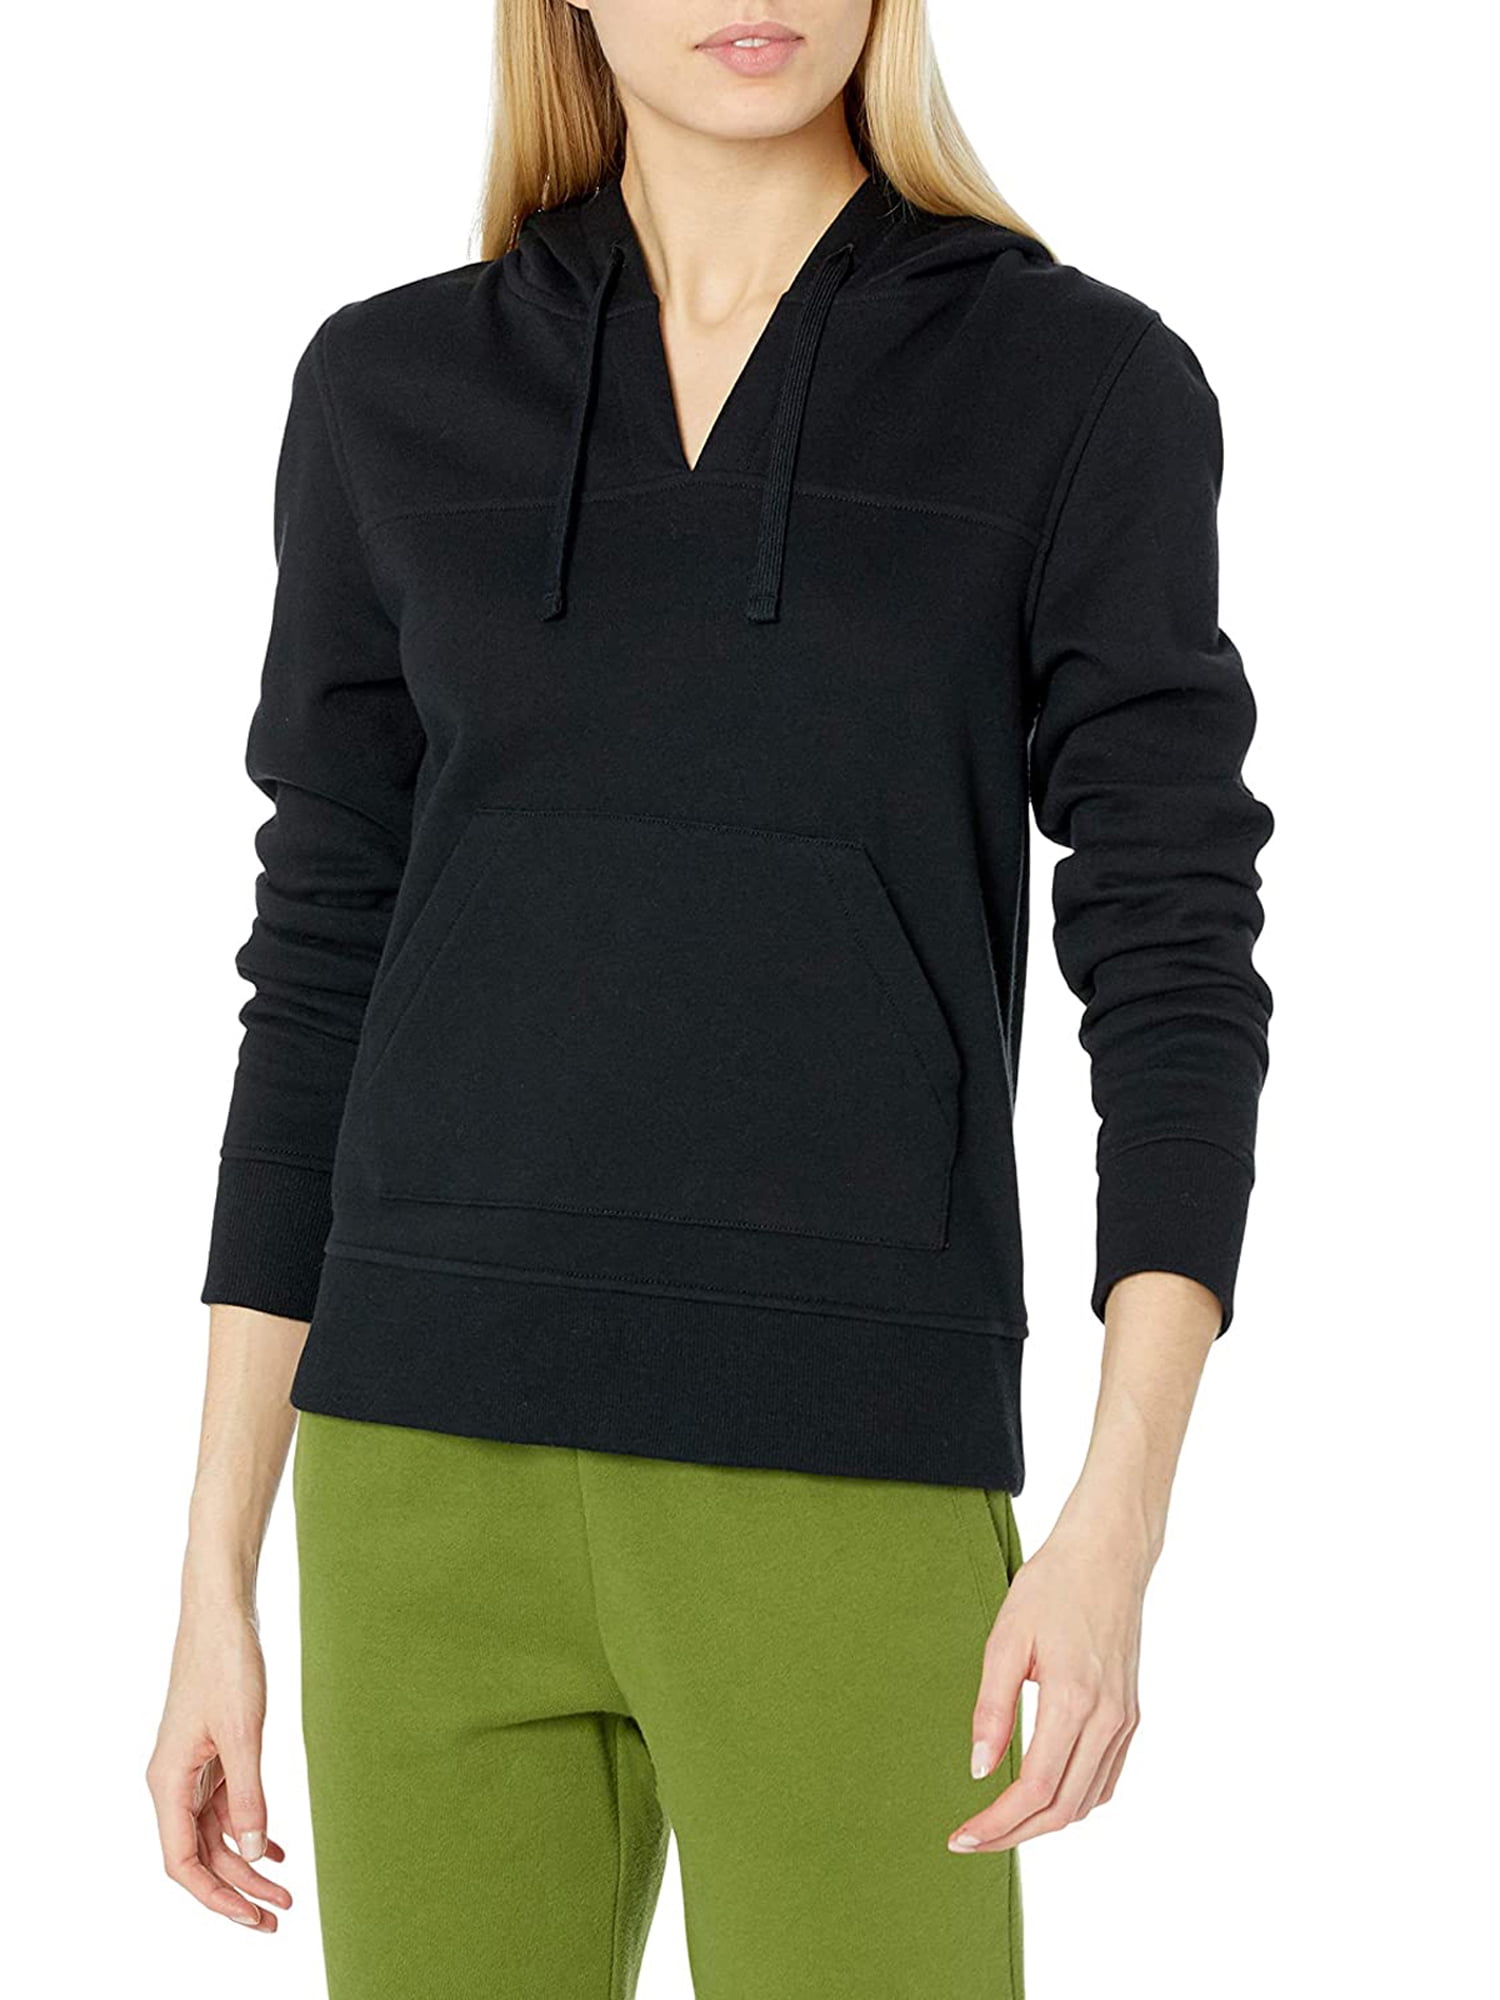 S-XXL Happy Sailed Womens Tie Dye Printed Hoodies Tops Long Sleeve Drawstring Pullover Sweatshirts with Pocket 